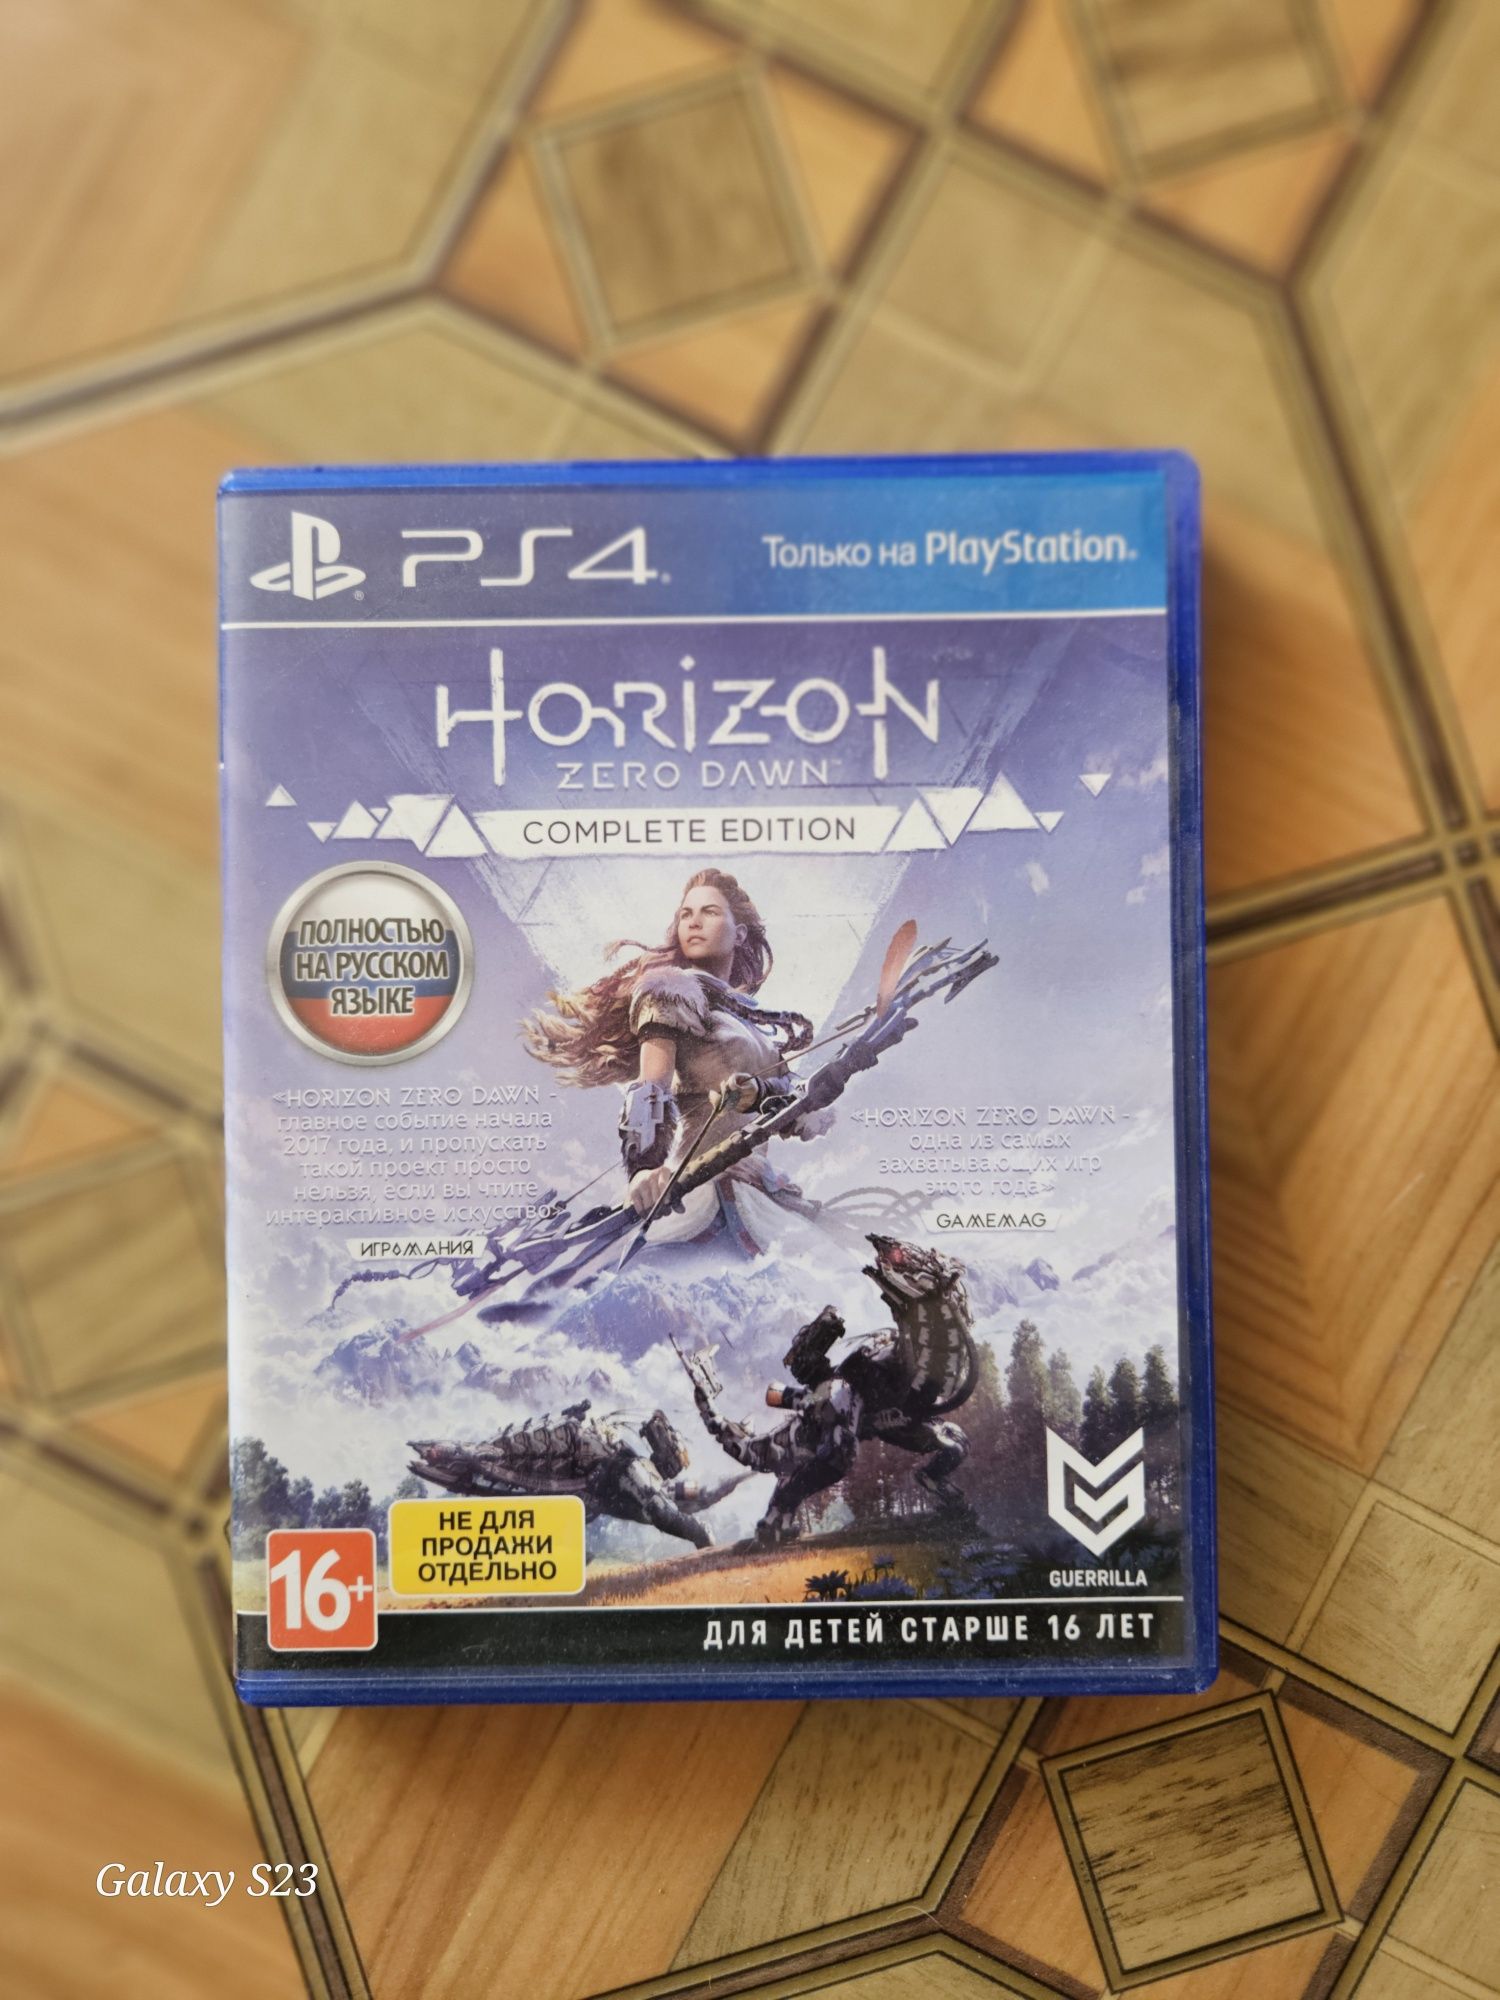 Продам игру Horizont на пс4